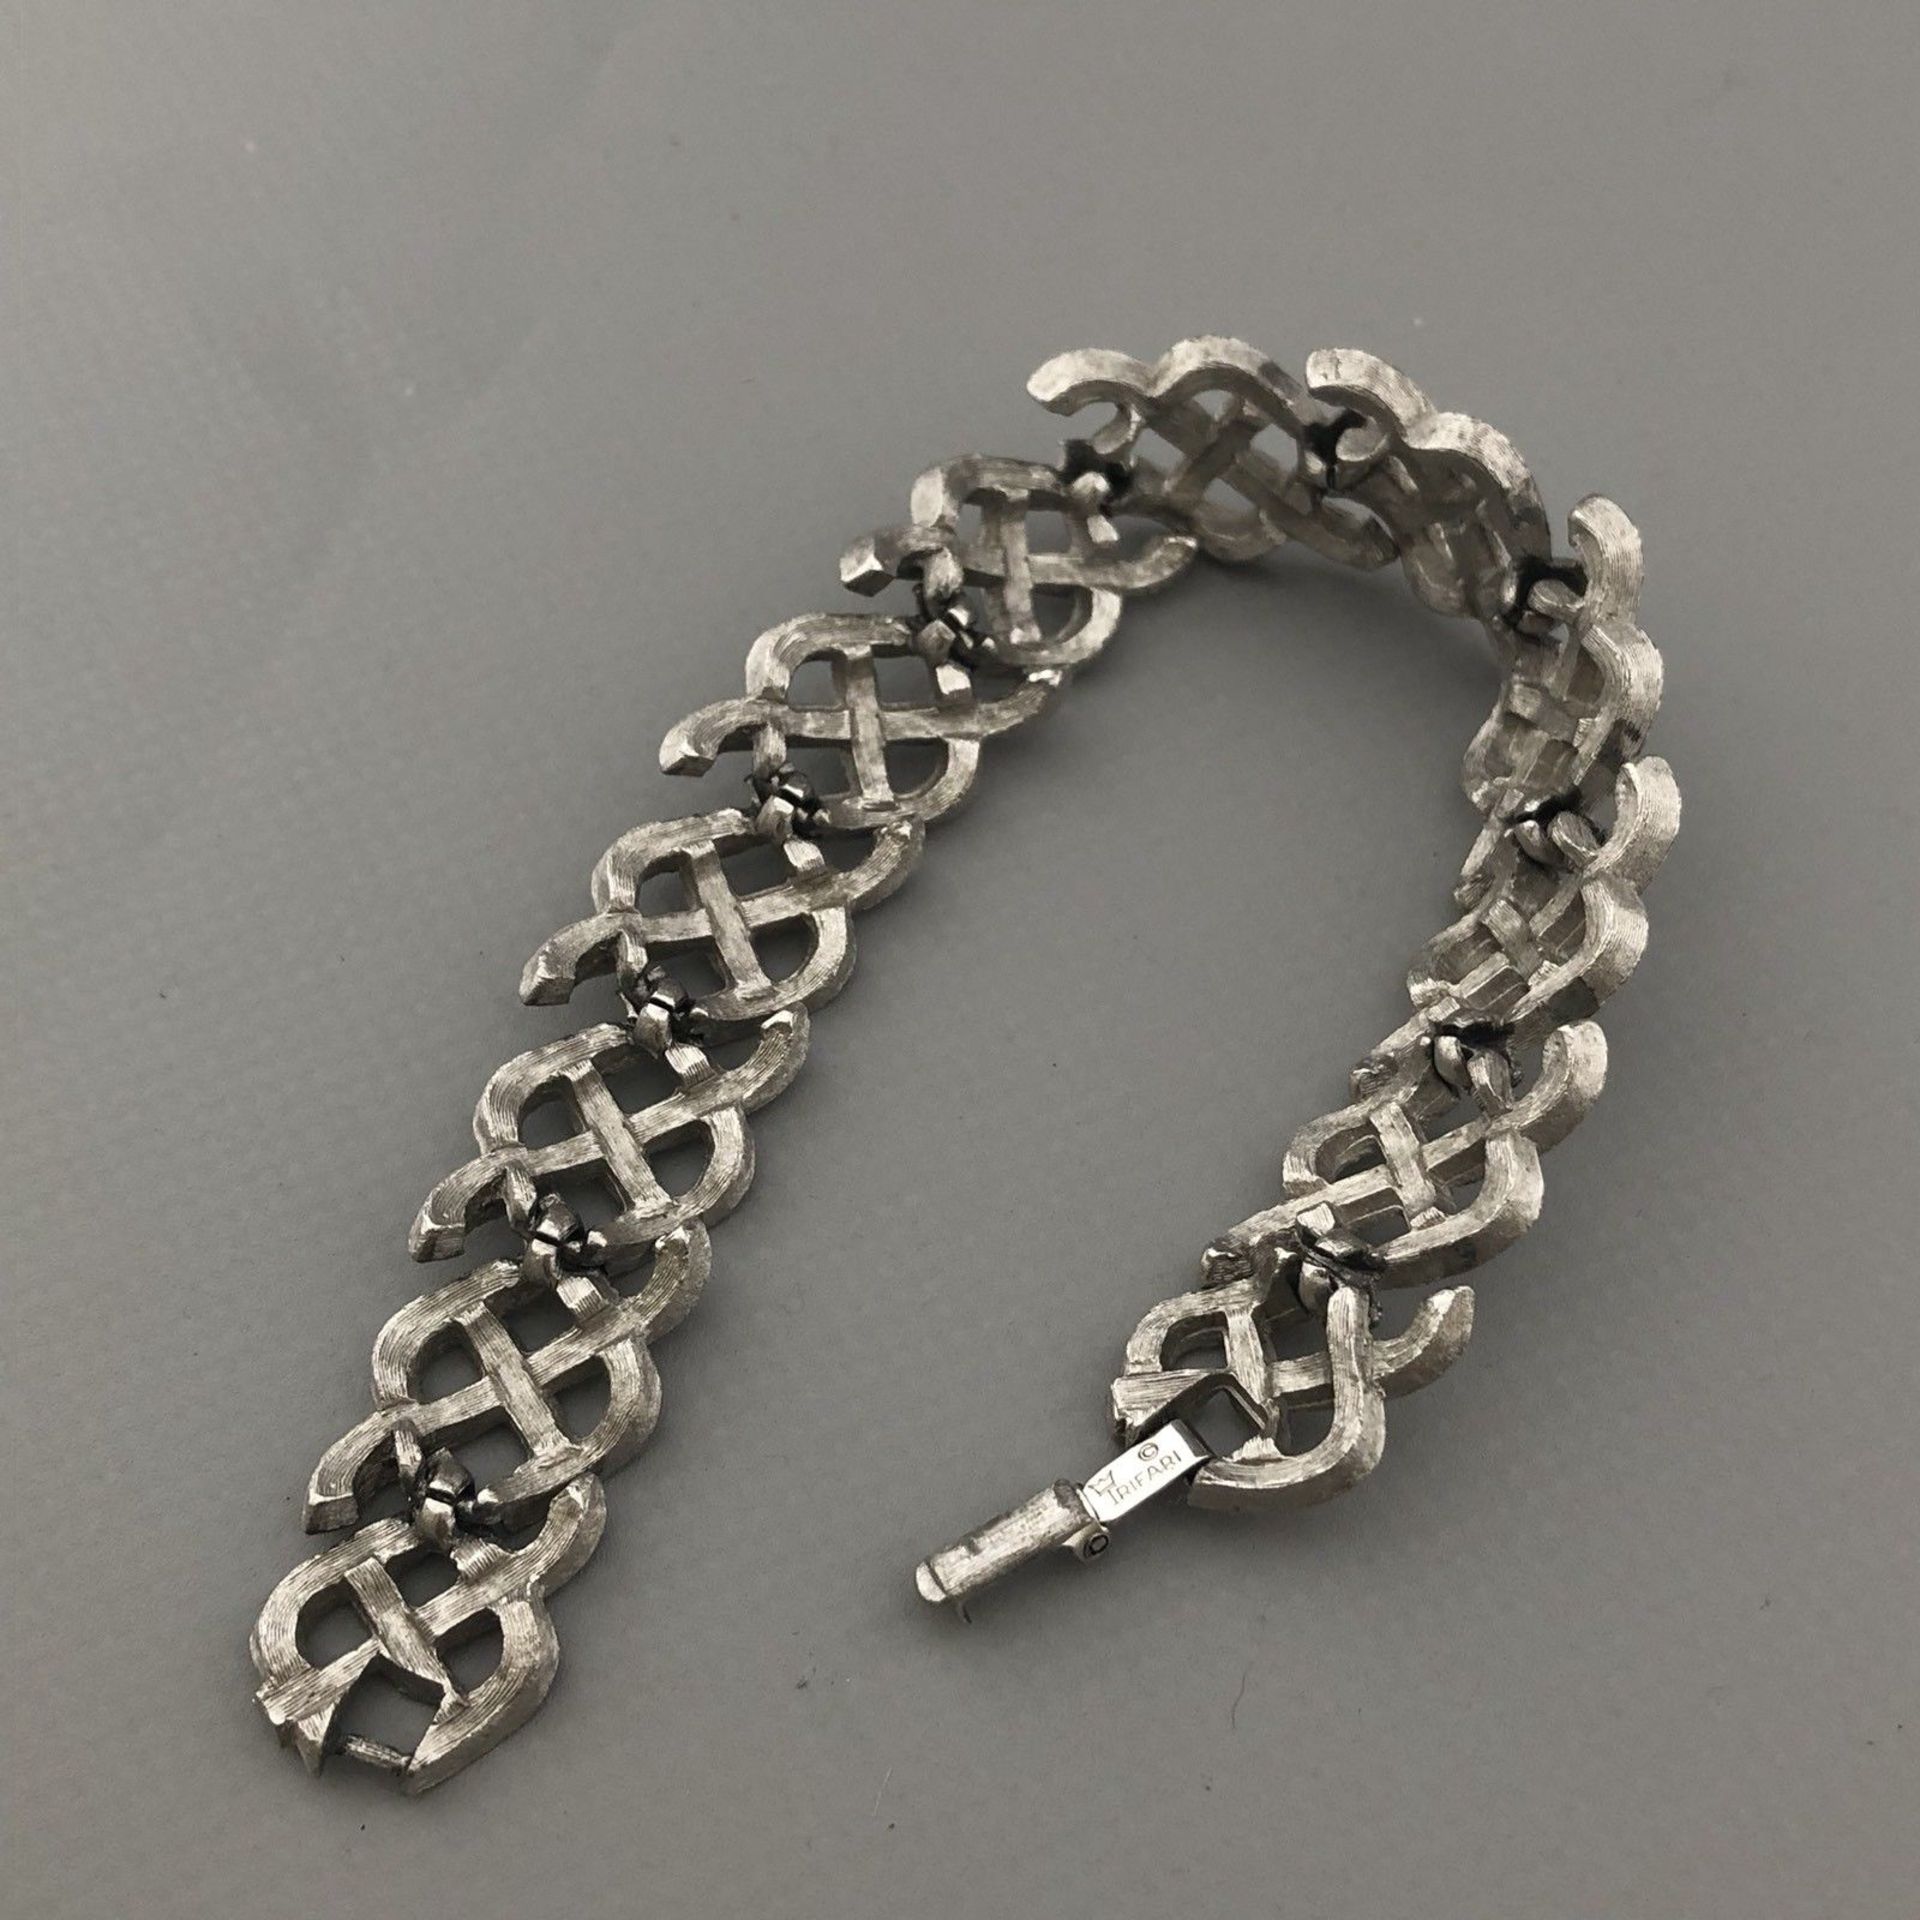 Vintage mid-century bracelet by TRIFARI textured silver tone cross hatch design - Image 3 of 4